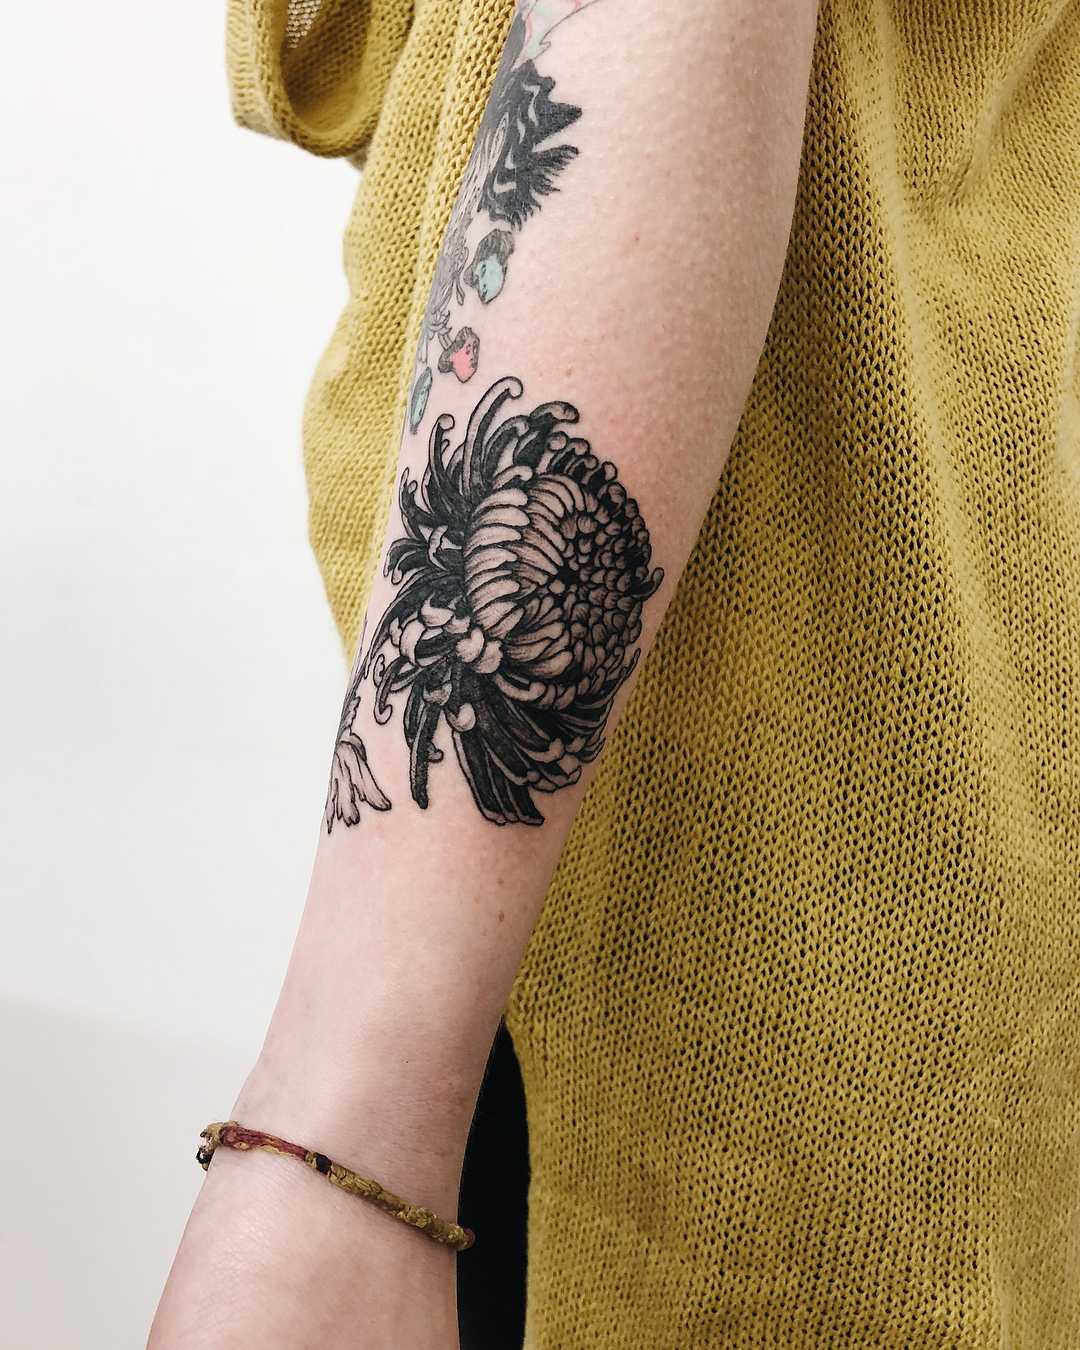 Chrysanthemum tattoo by Finley Jordan